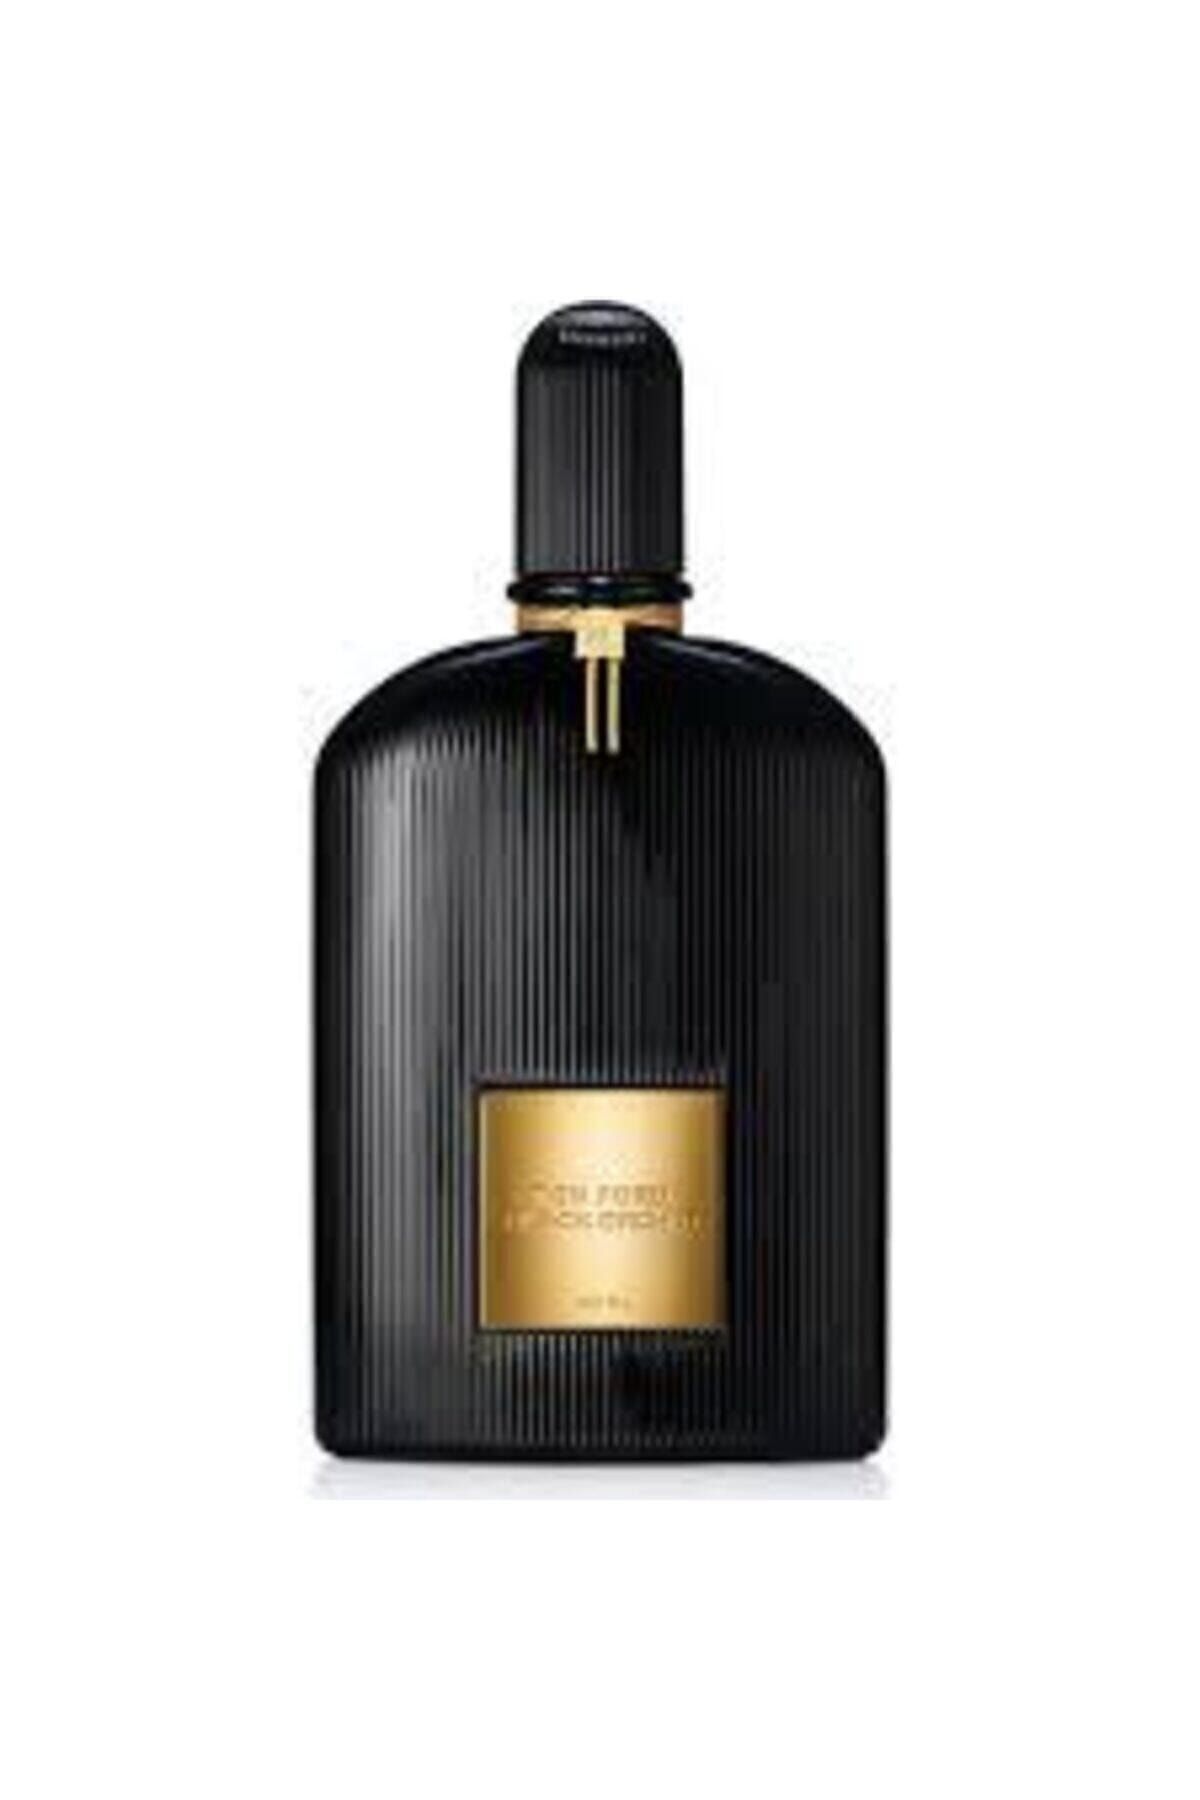 Black Orchid Tom Ford Black Orchıd Edp Parfum